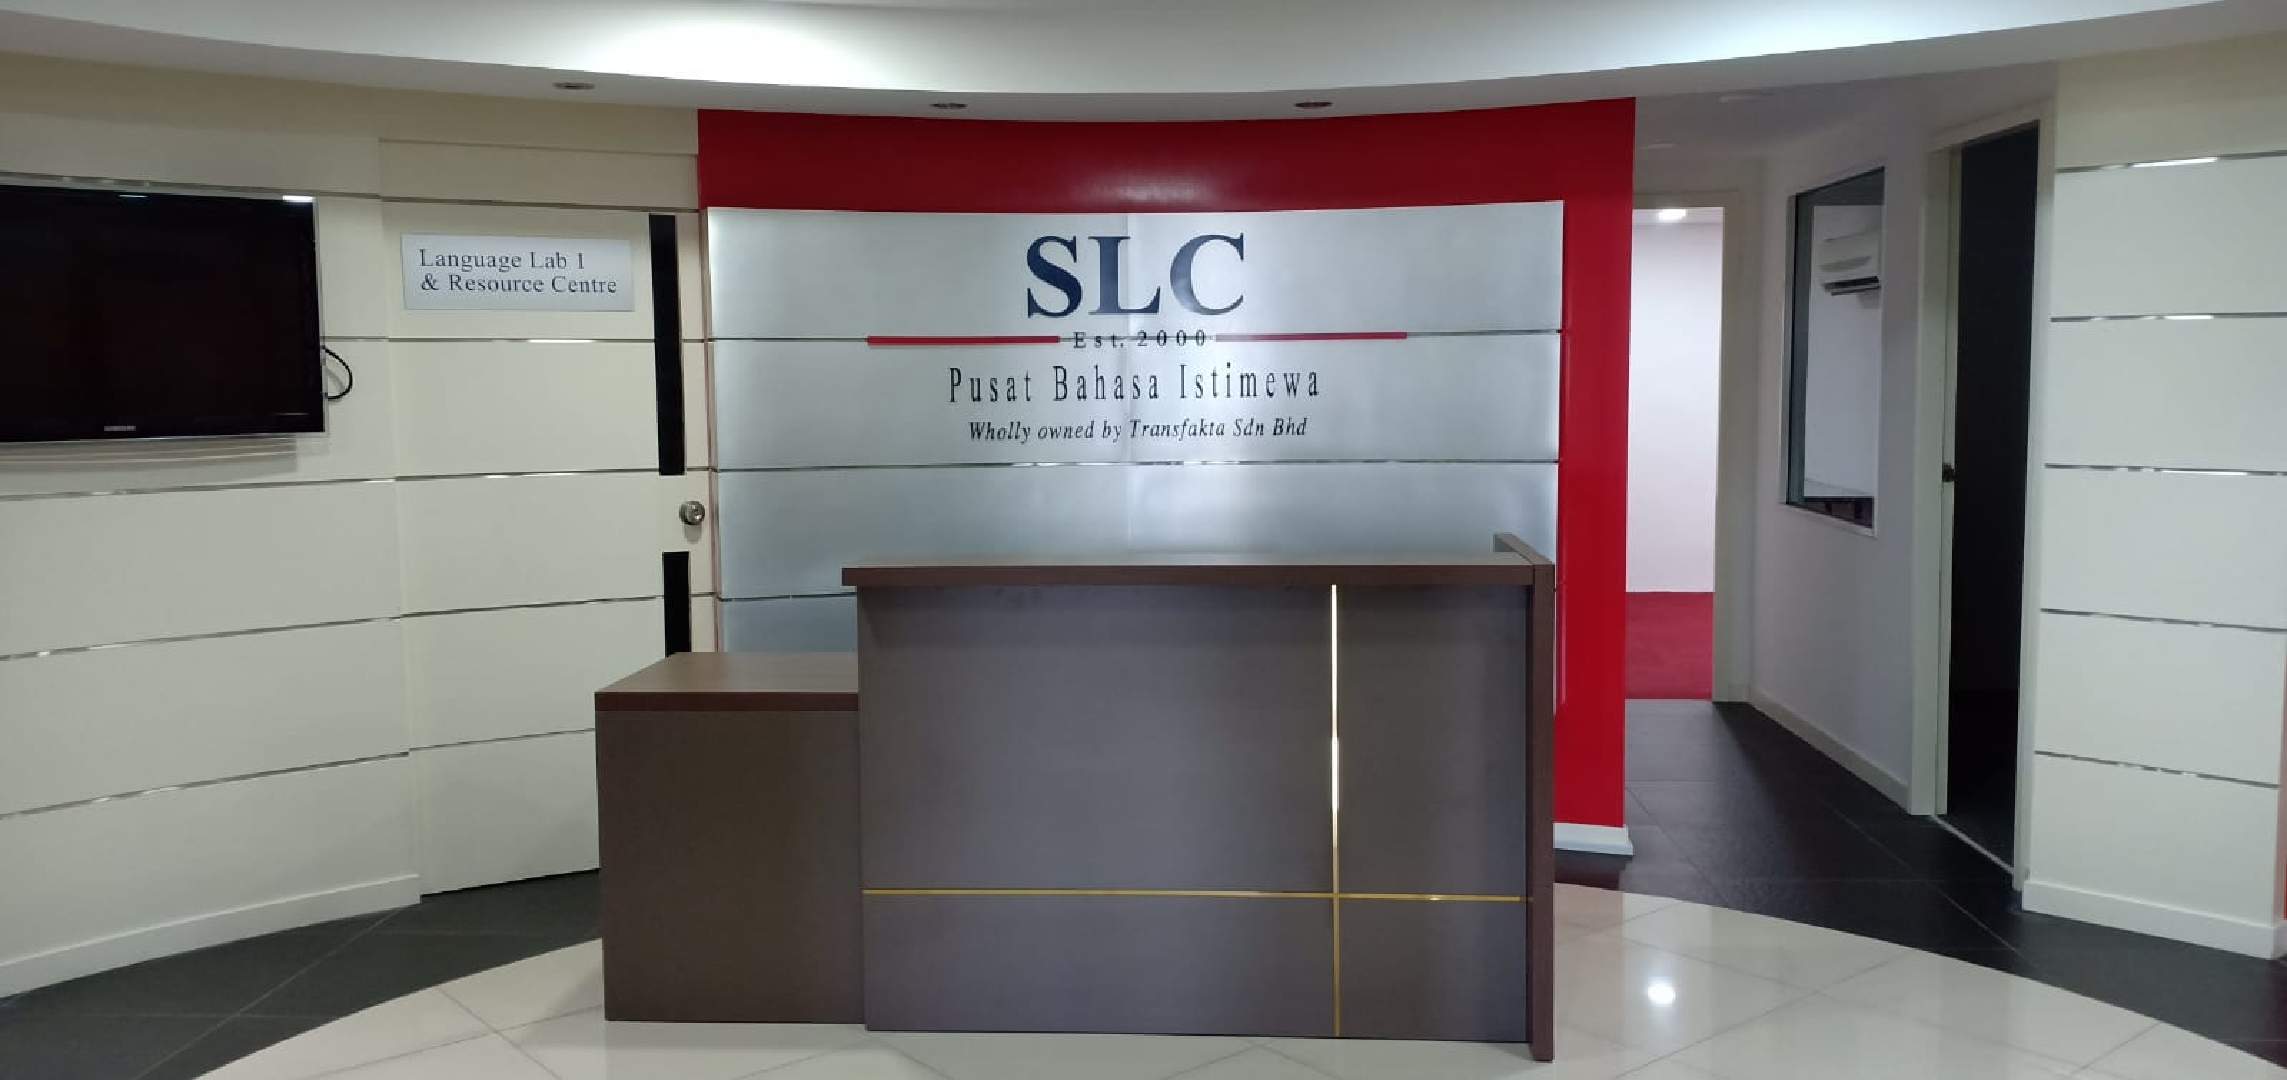 Slc Malaysia Petaling Jaya Malaysia Reviews Language International